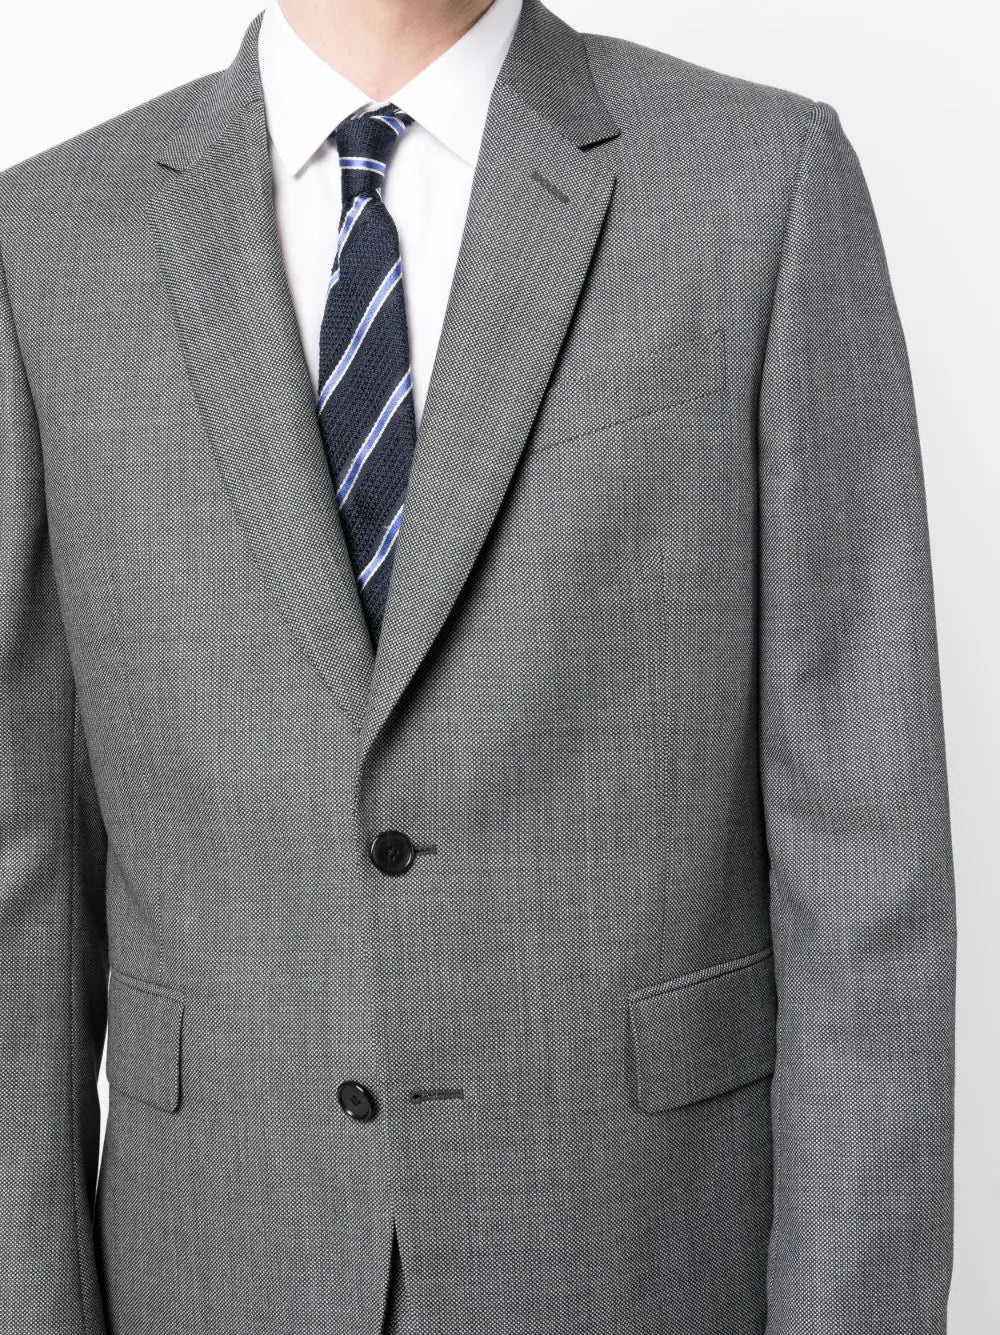 Mens Tailored Fit 2 Button Suit - 5